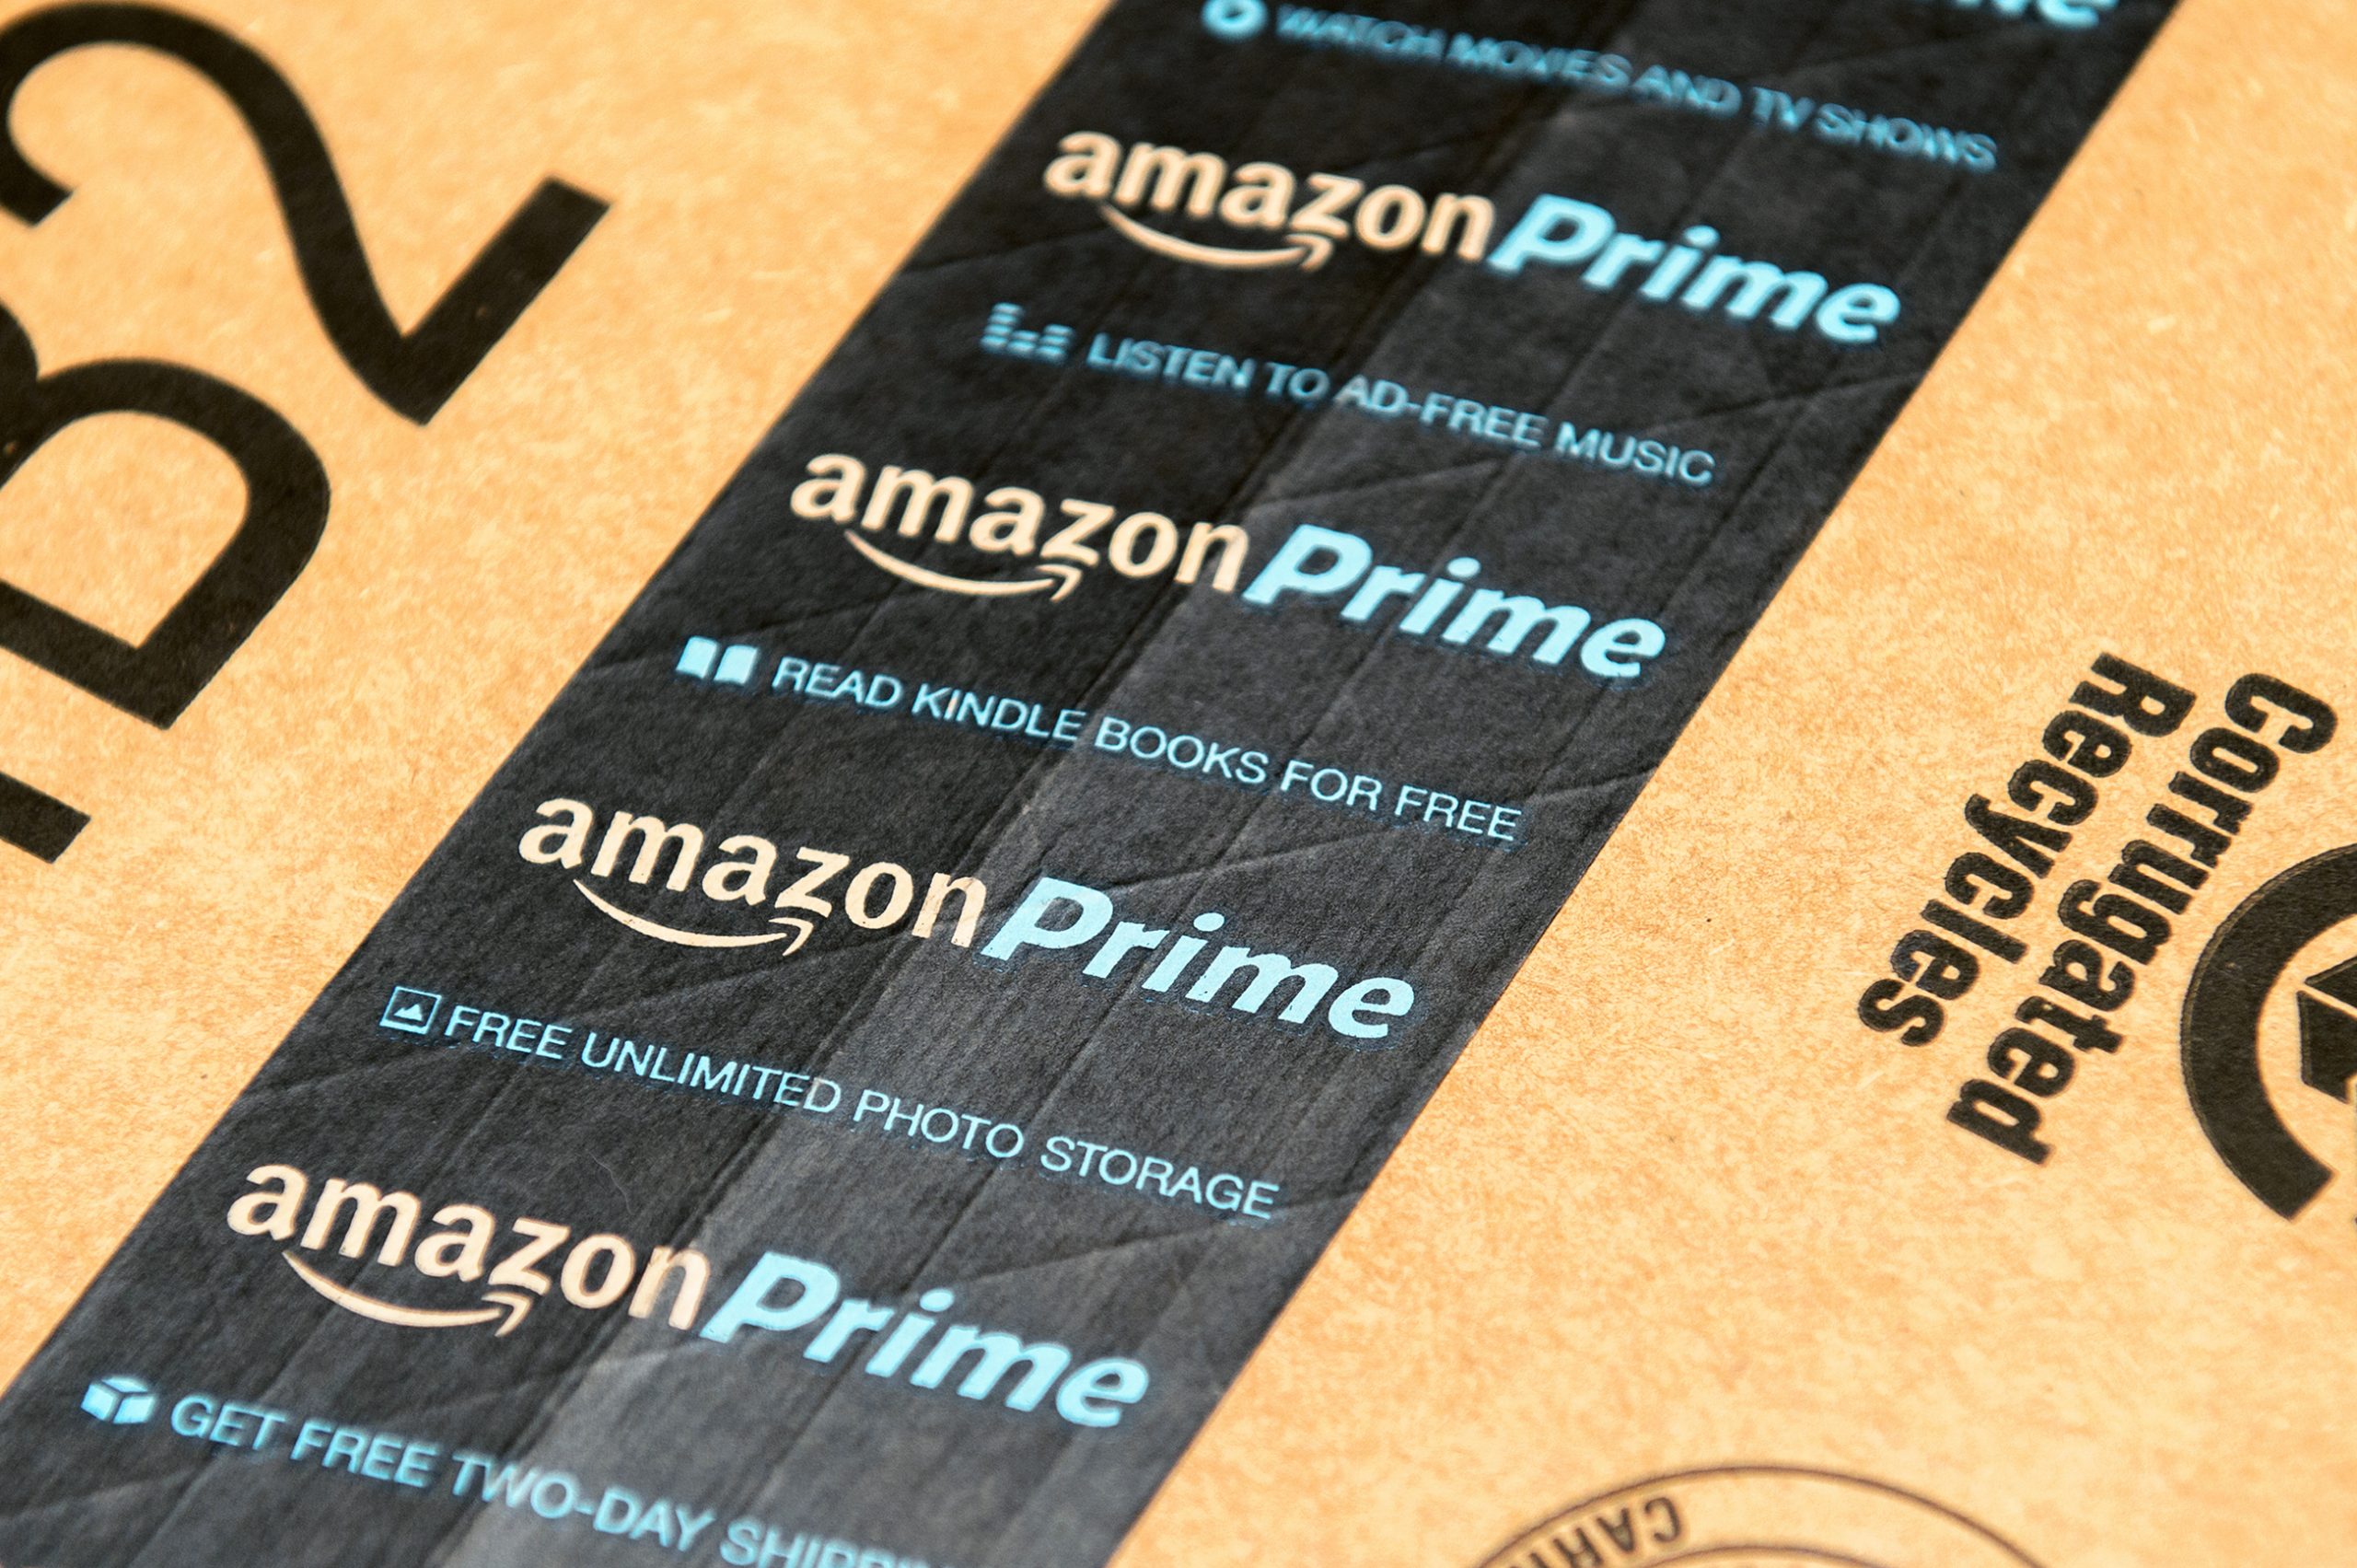 Amazon Prime, fot. Shutterstock